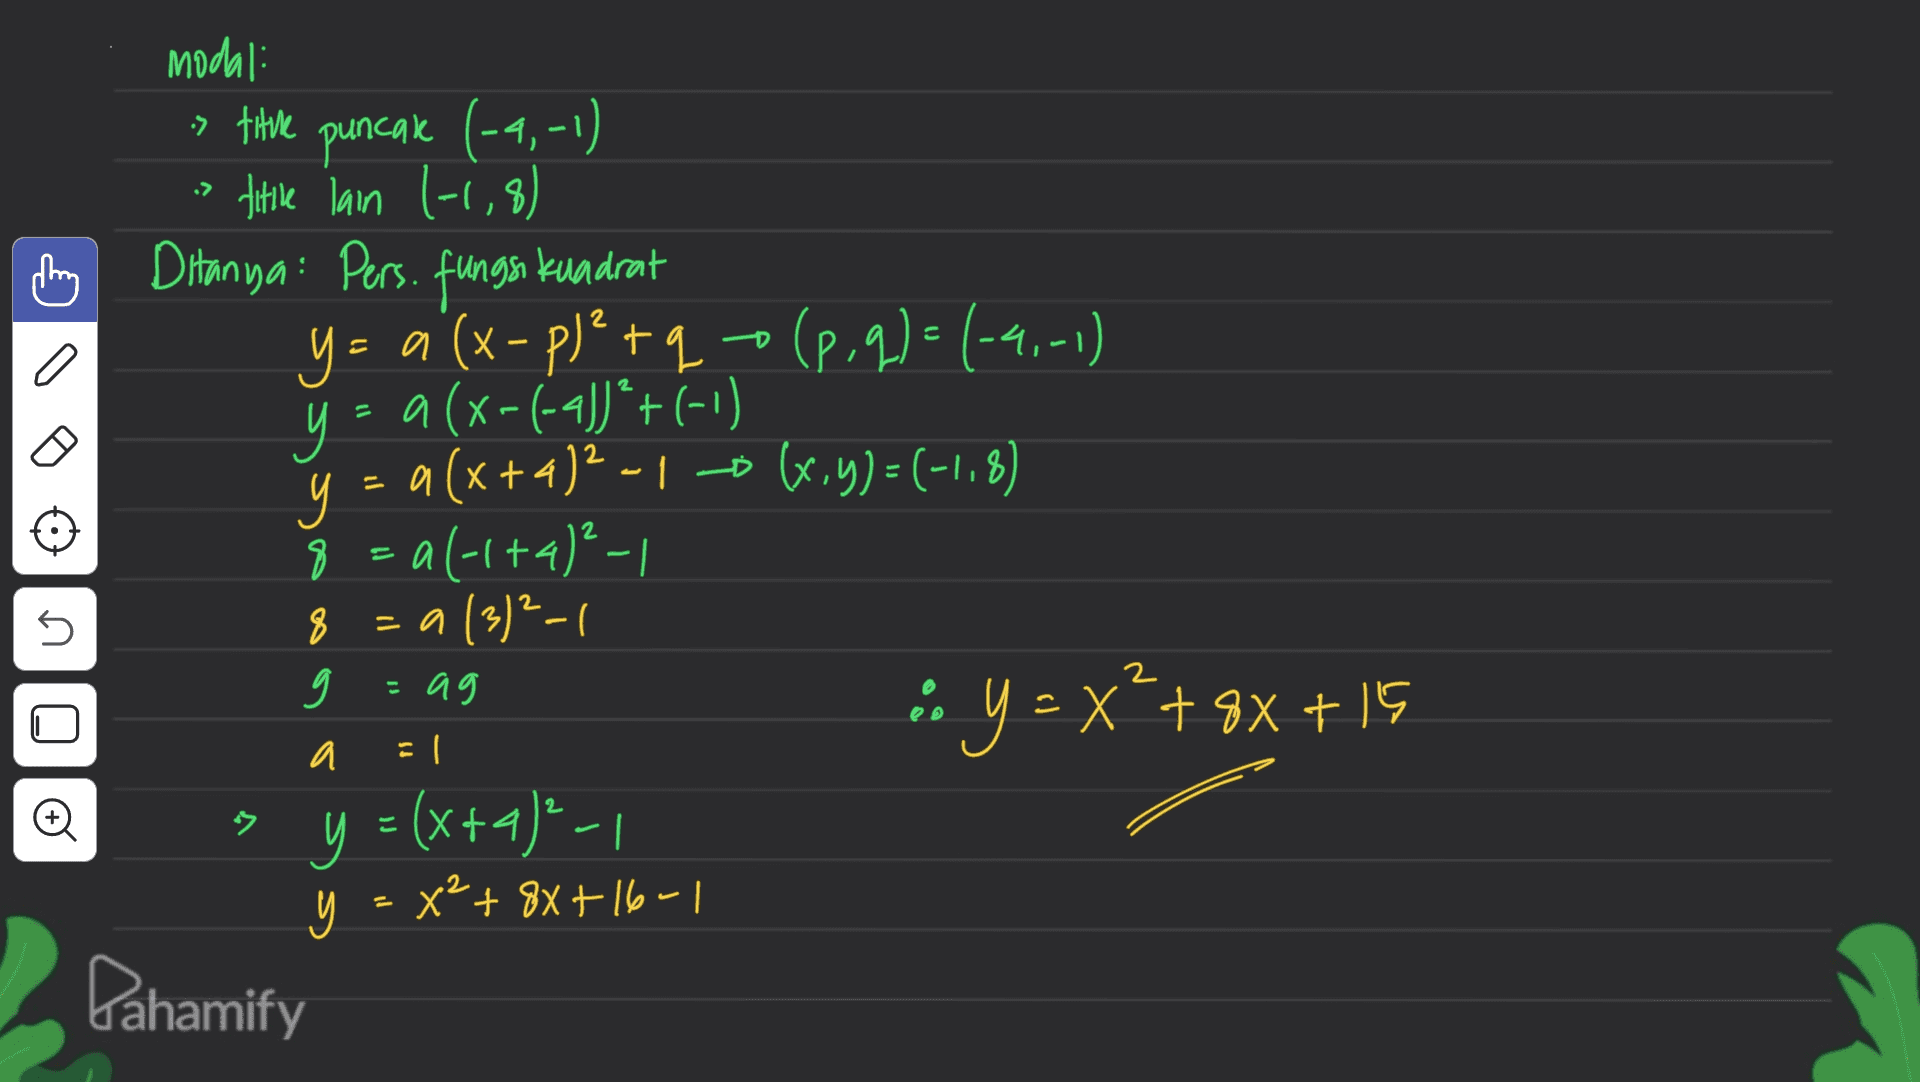 > 2 + D I a modali » title puncak (-9,-1) title lain 1-1,8) h Ditanya: Pers. fungsi kuadrat y = a (x - p) +9+(99)-(-4,-1) y = a (x-(-43)*+(-1) и = a (x+4)2 -1 -0 (,y) = (-1, x+ -1,8) 8 = al-1+4)²-1 = a (3)²-1 9 • Y = x++ 9x + 15 > y = (x+4)- y = (+4²-1 y = x2 + 8x + 16-1 + Pahamify 45 8 2 = ag y S a El - 